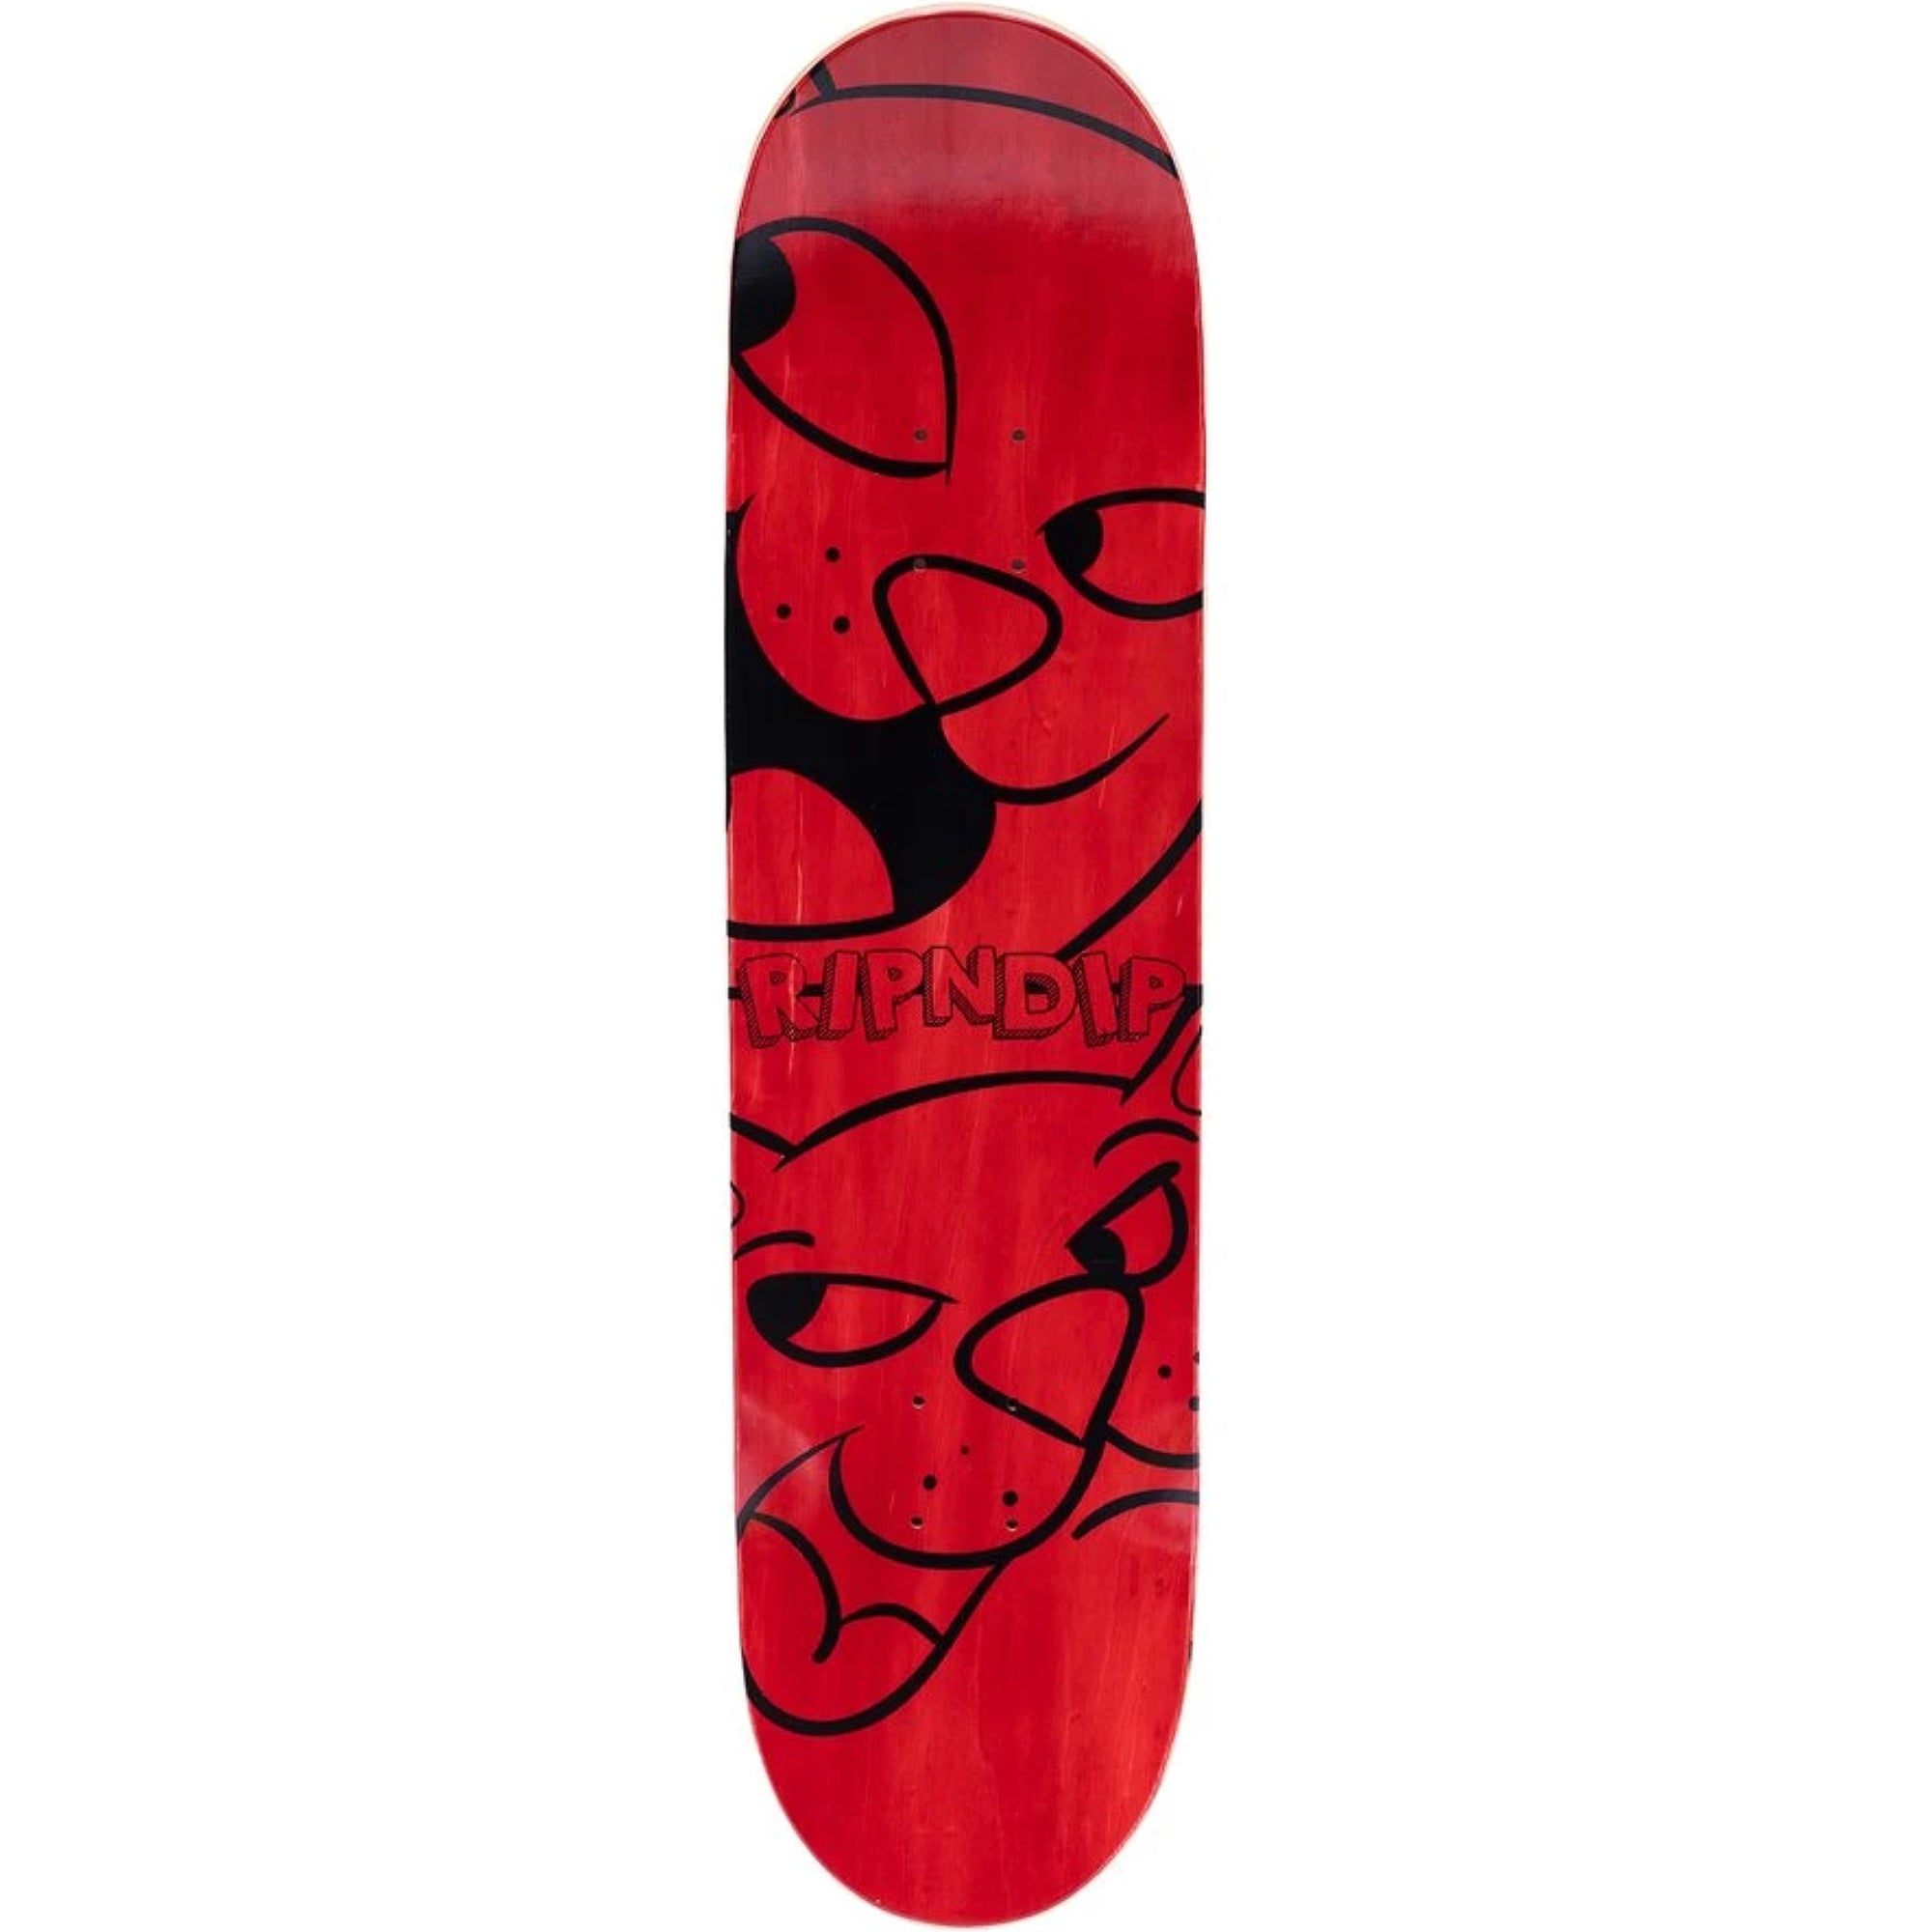 Ripndip Pop Nerm Skateboard Deck Multi 8.25"